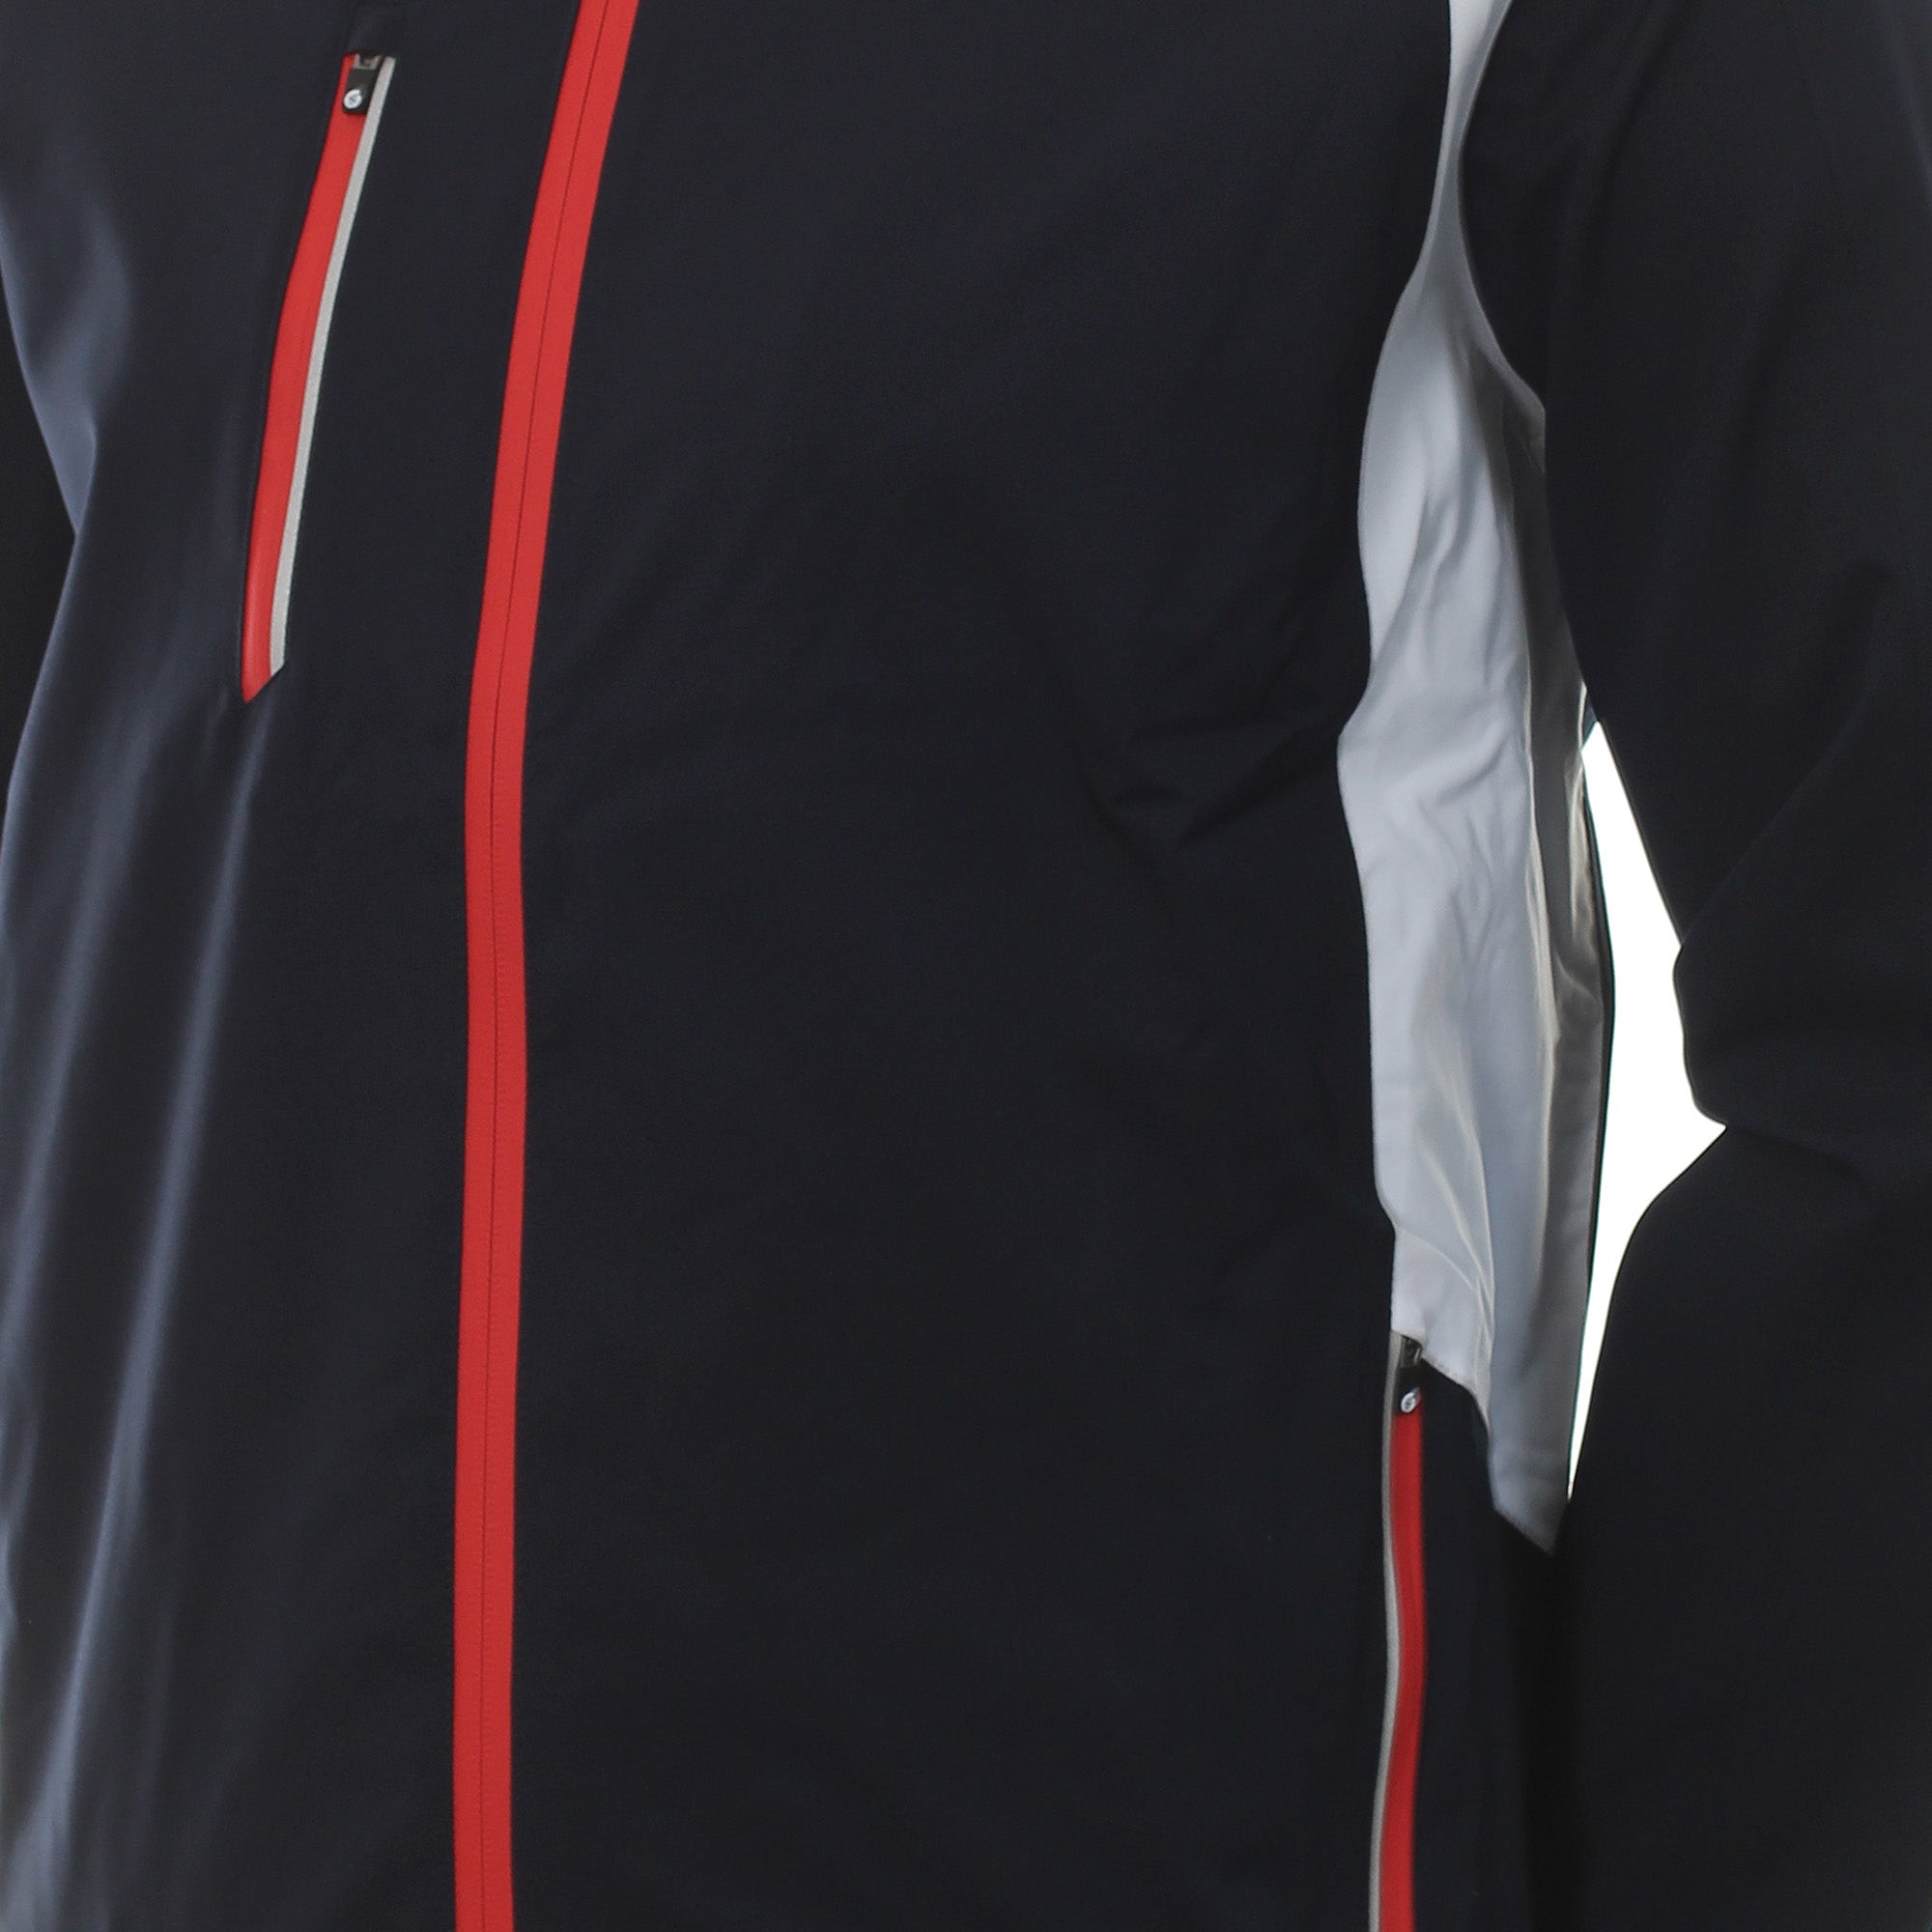 sunderland-golf-valberg-waterproof-jacket-navy-silver-red